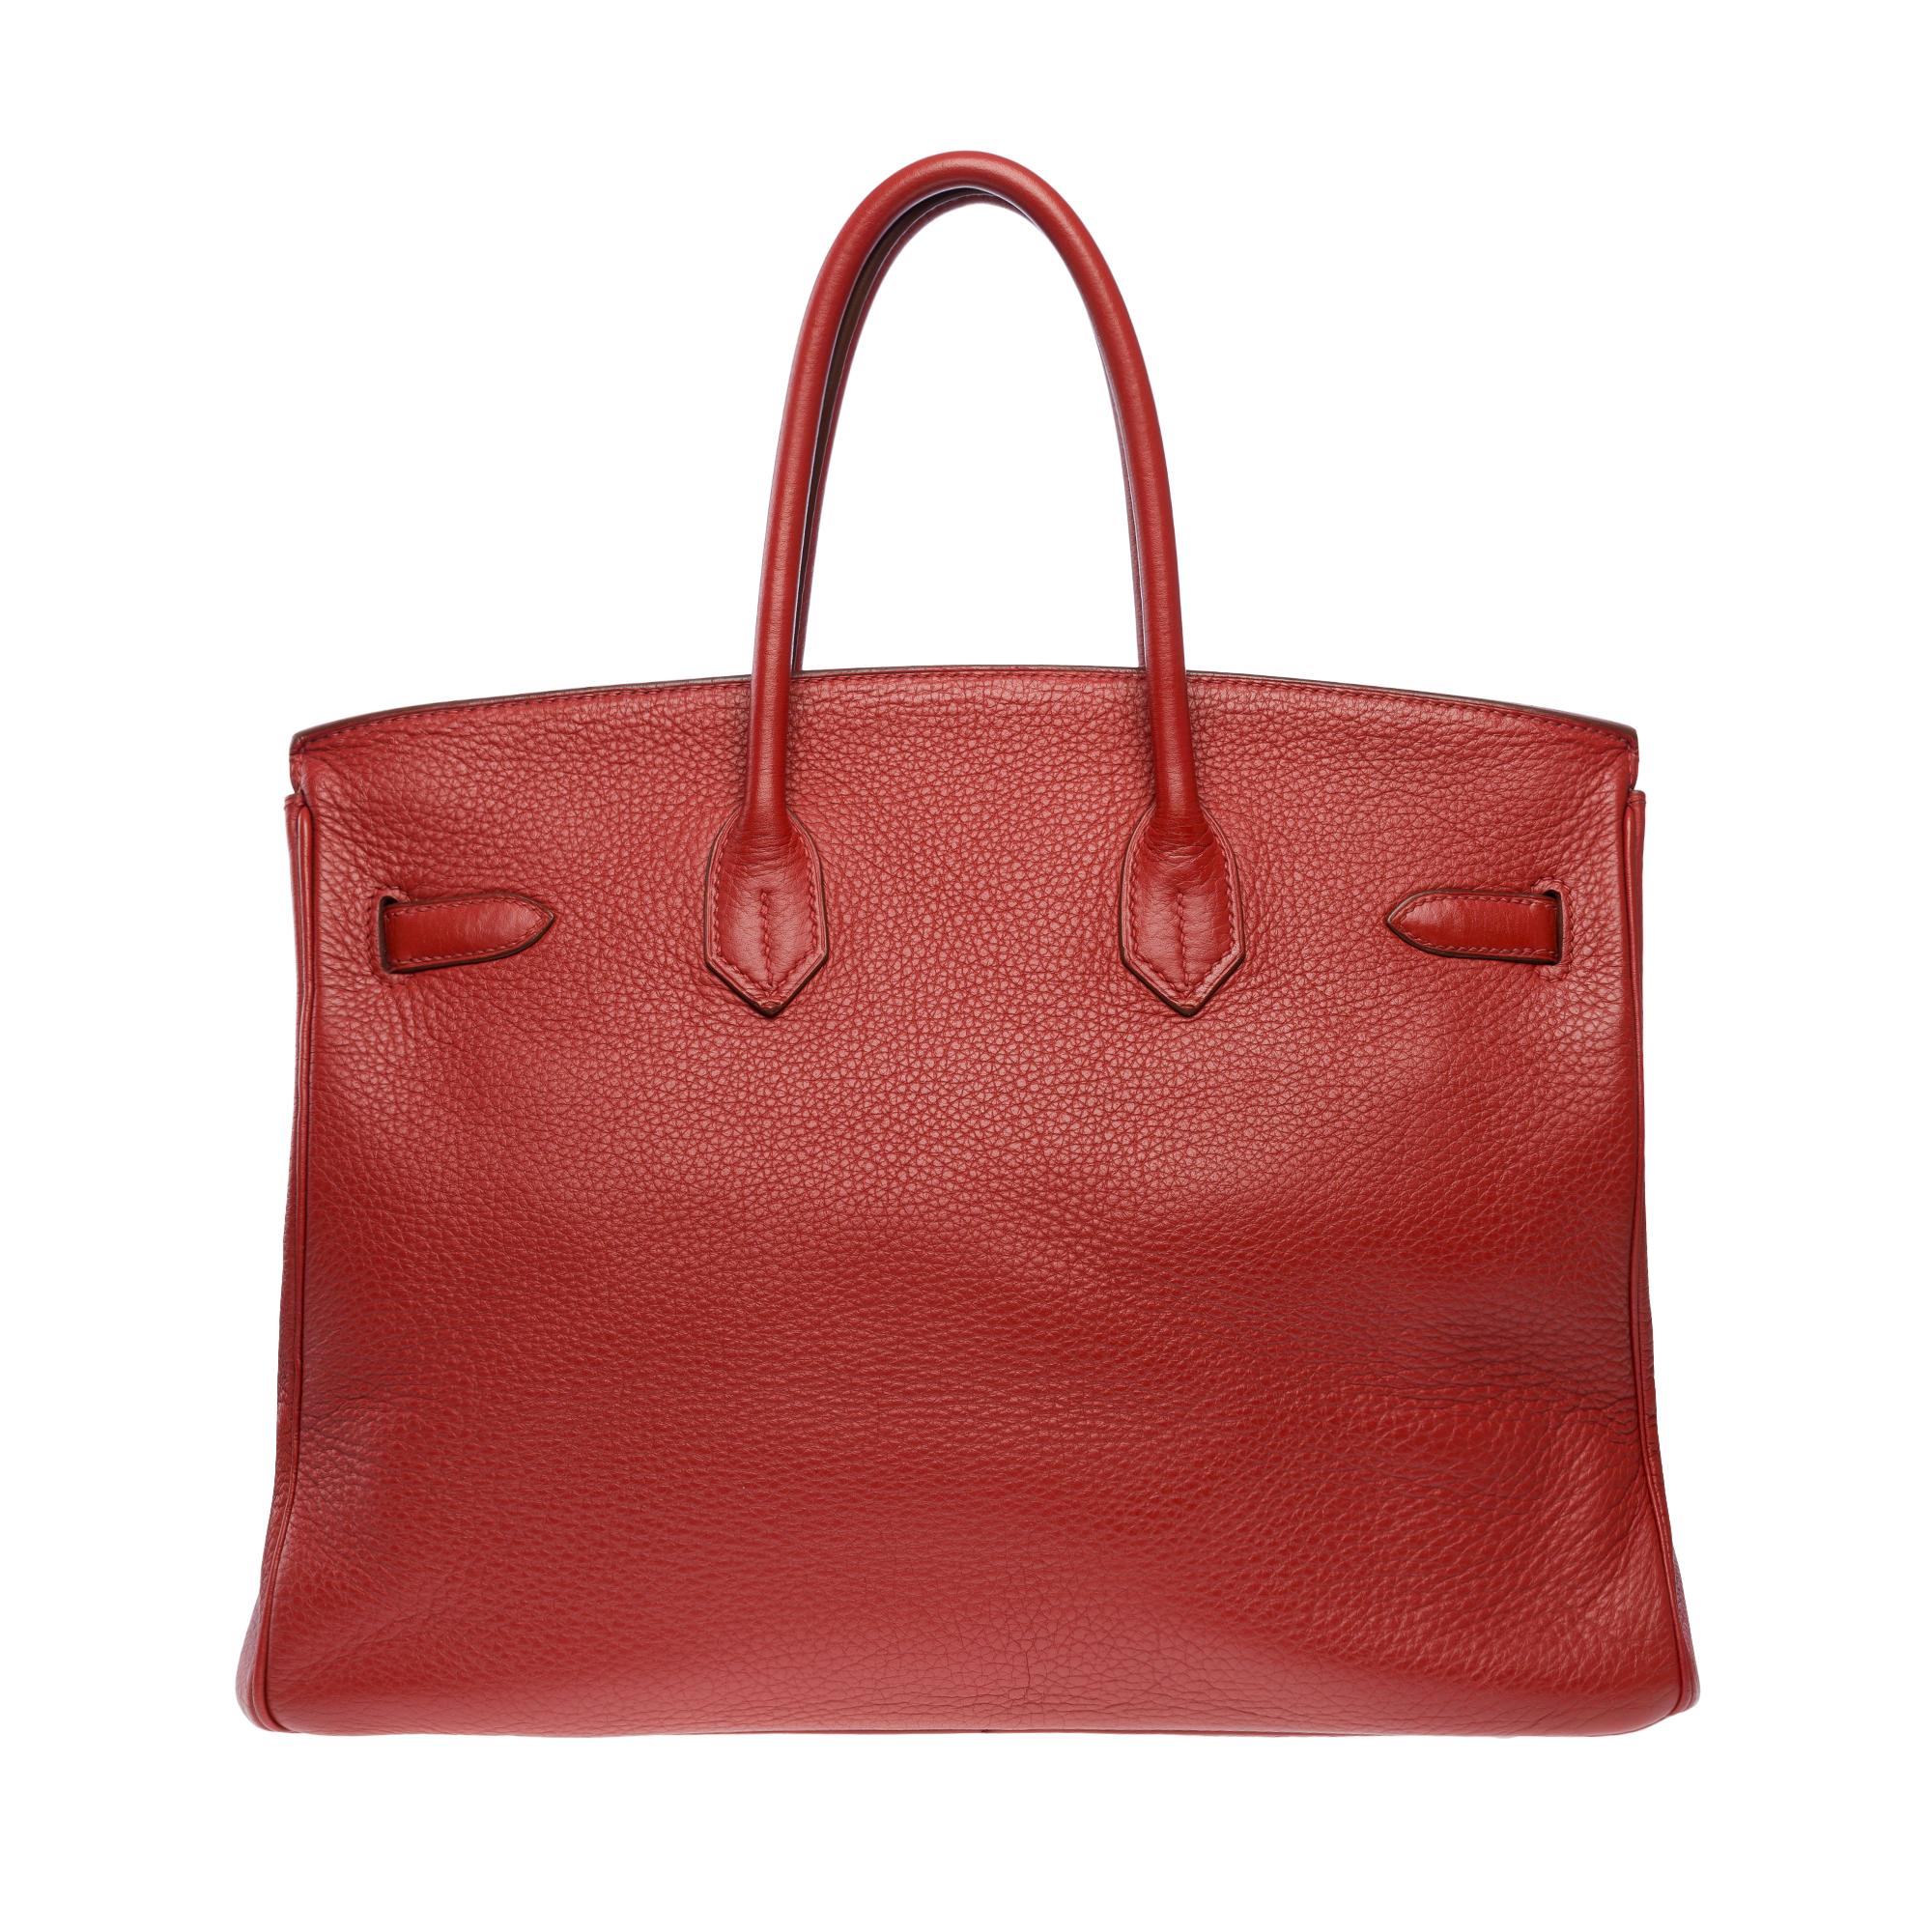 Stunning Hermès Birkin 35 handbag in Sienne Togo leather, SHW For Sale 1